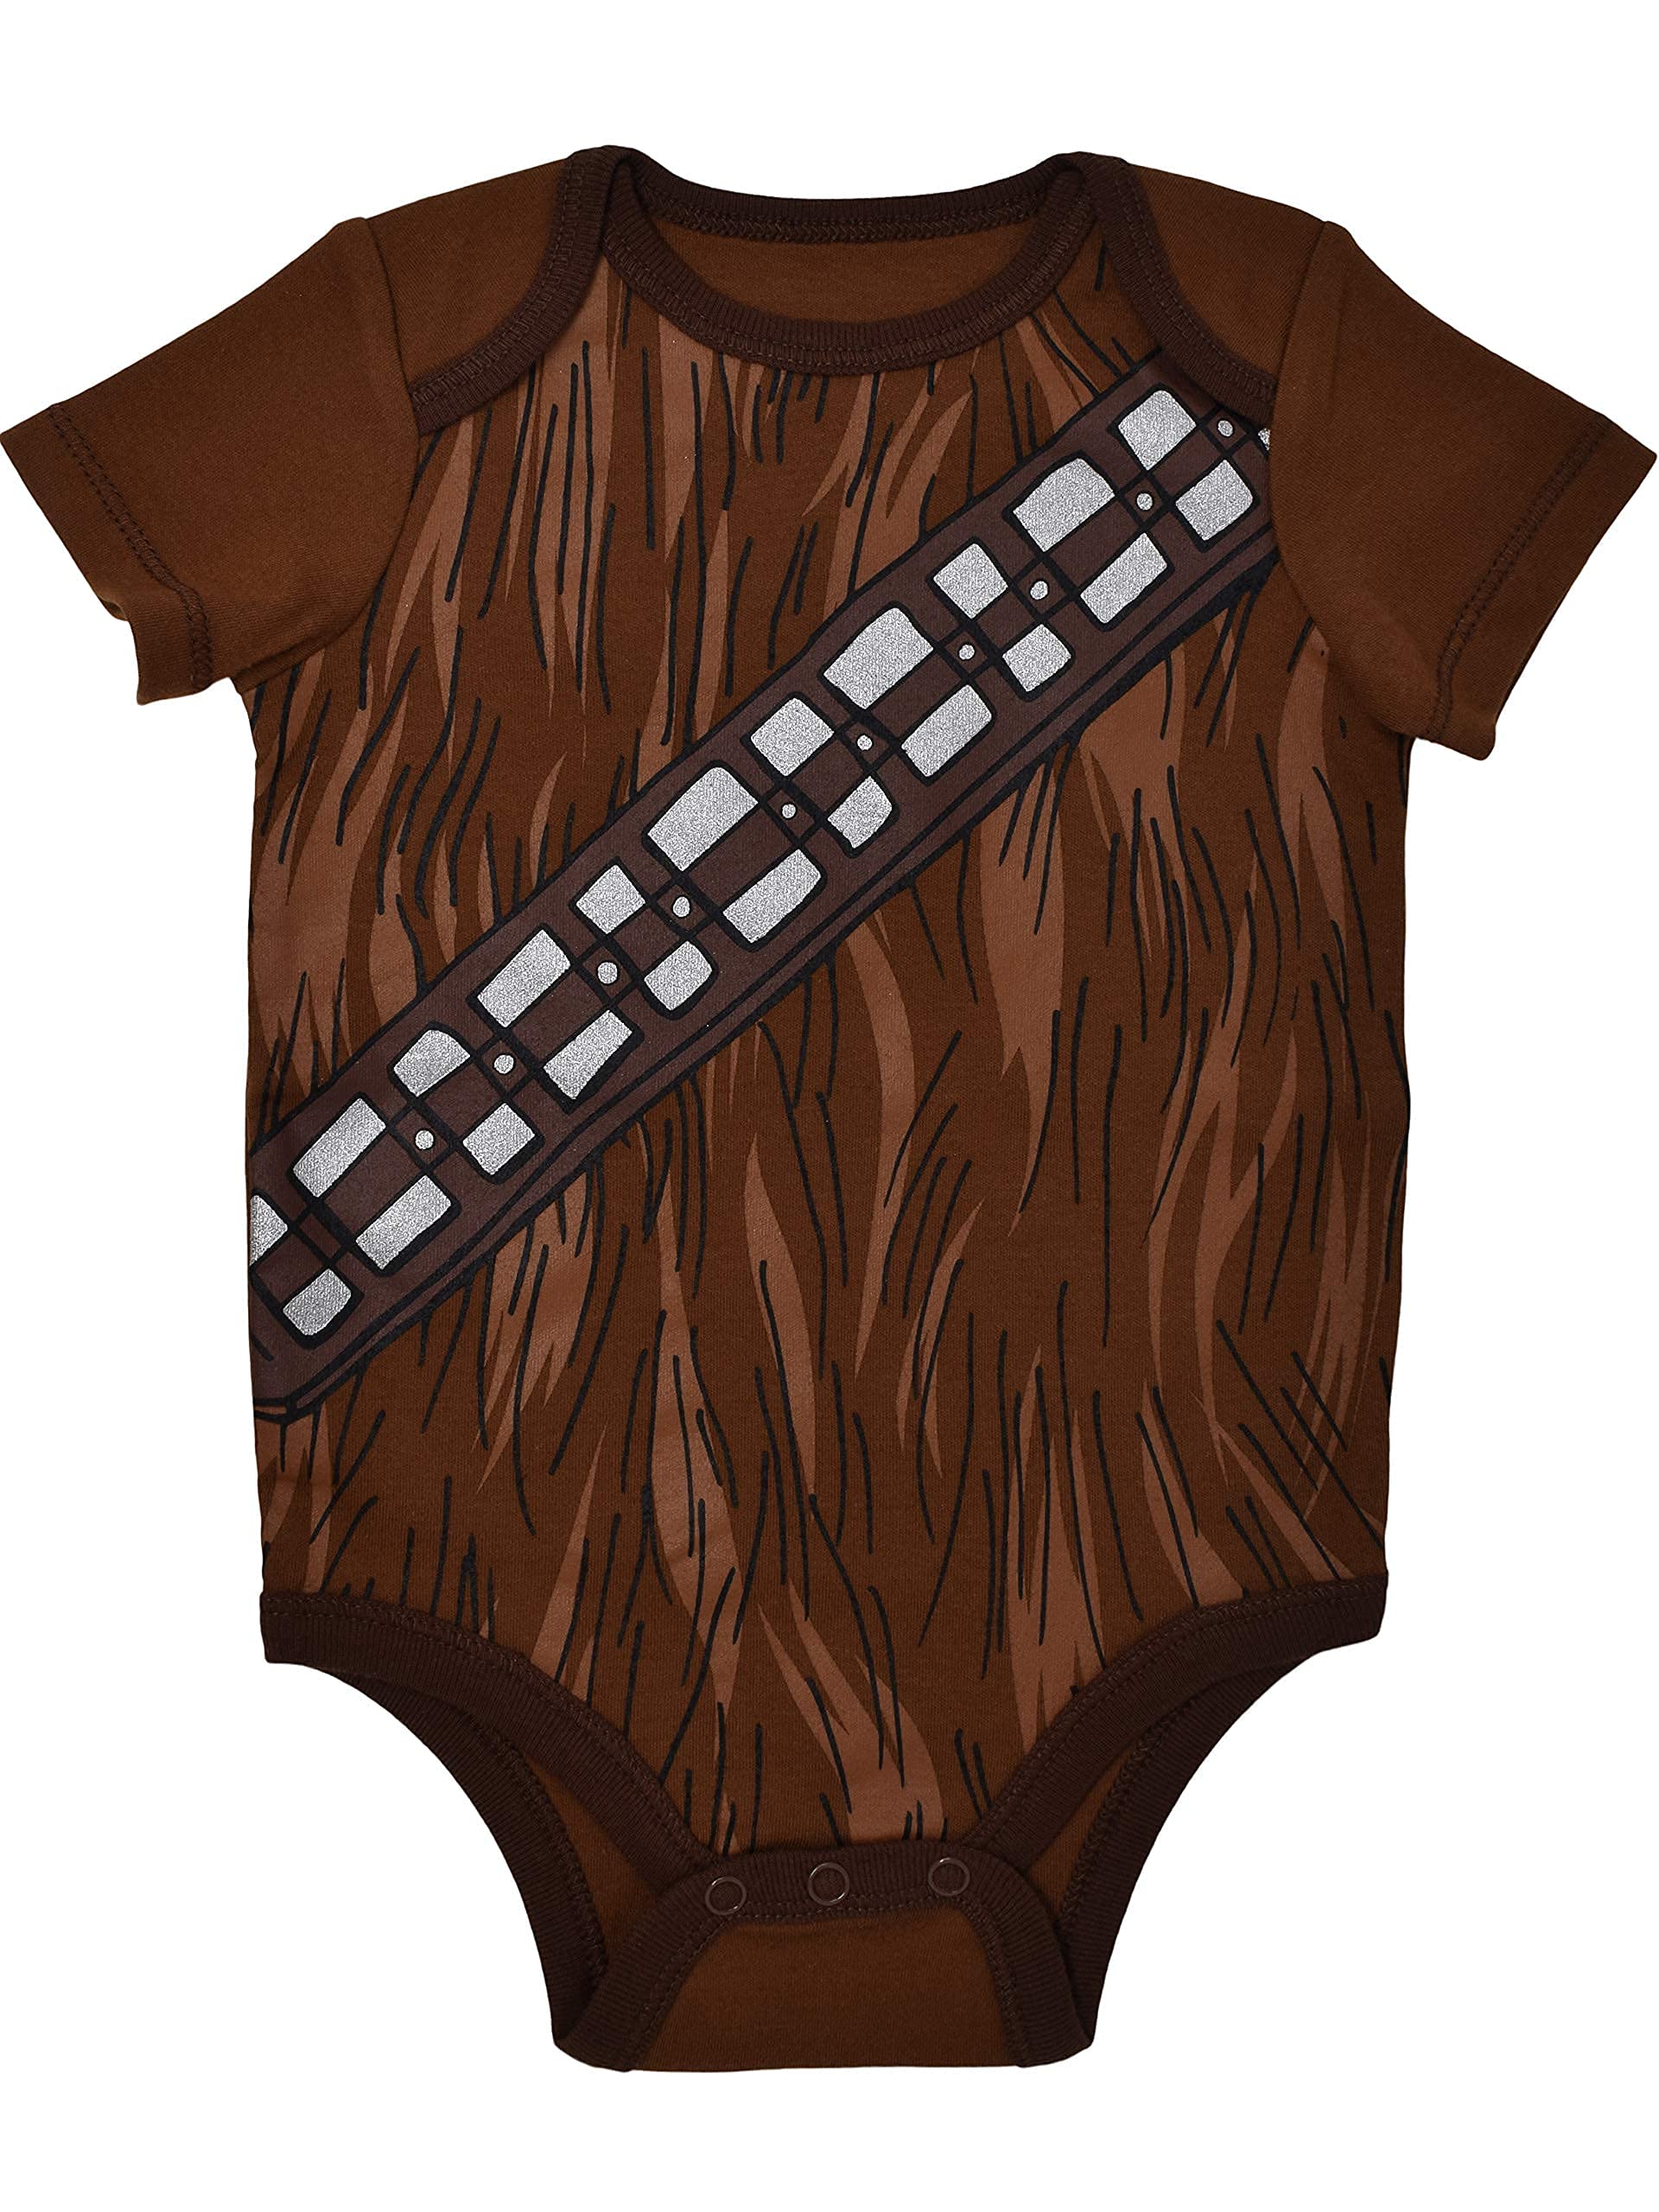 STAR WARS Chewbacca C-3PO R2-D2 Darth Vader Yoda 5 Pack Short Sleeve Bodysuits Newborn to Infant